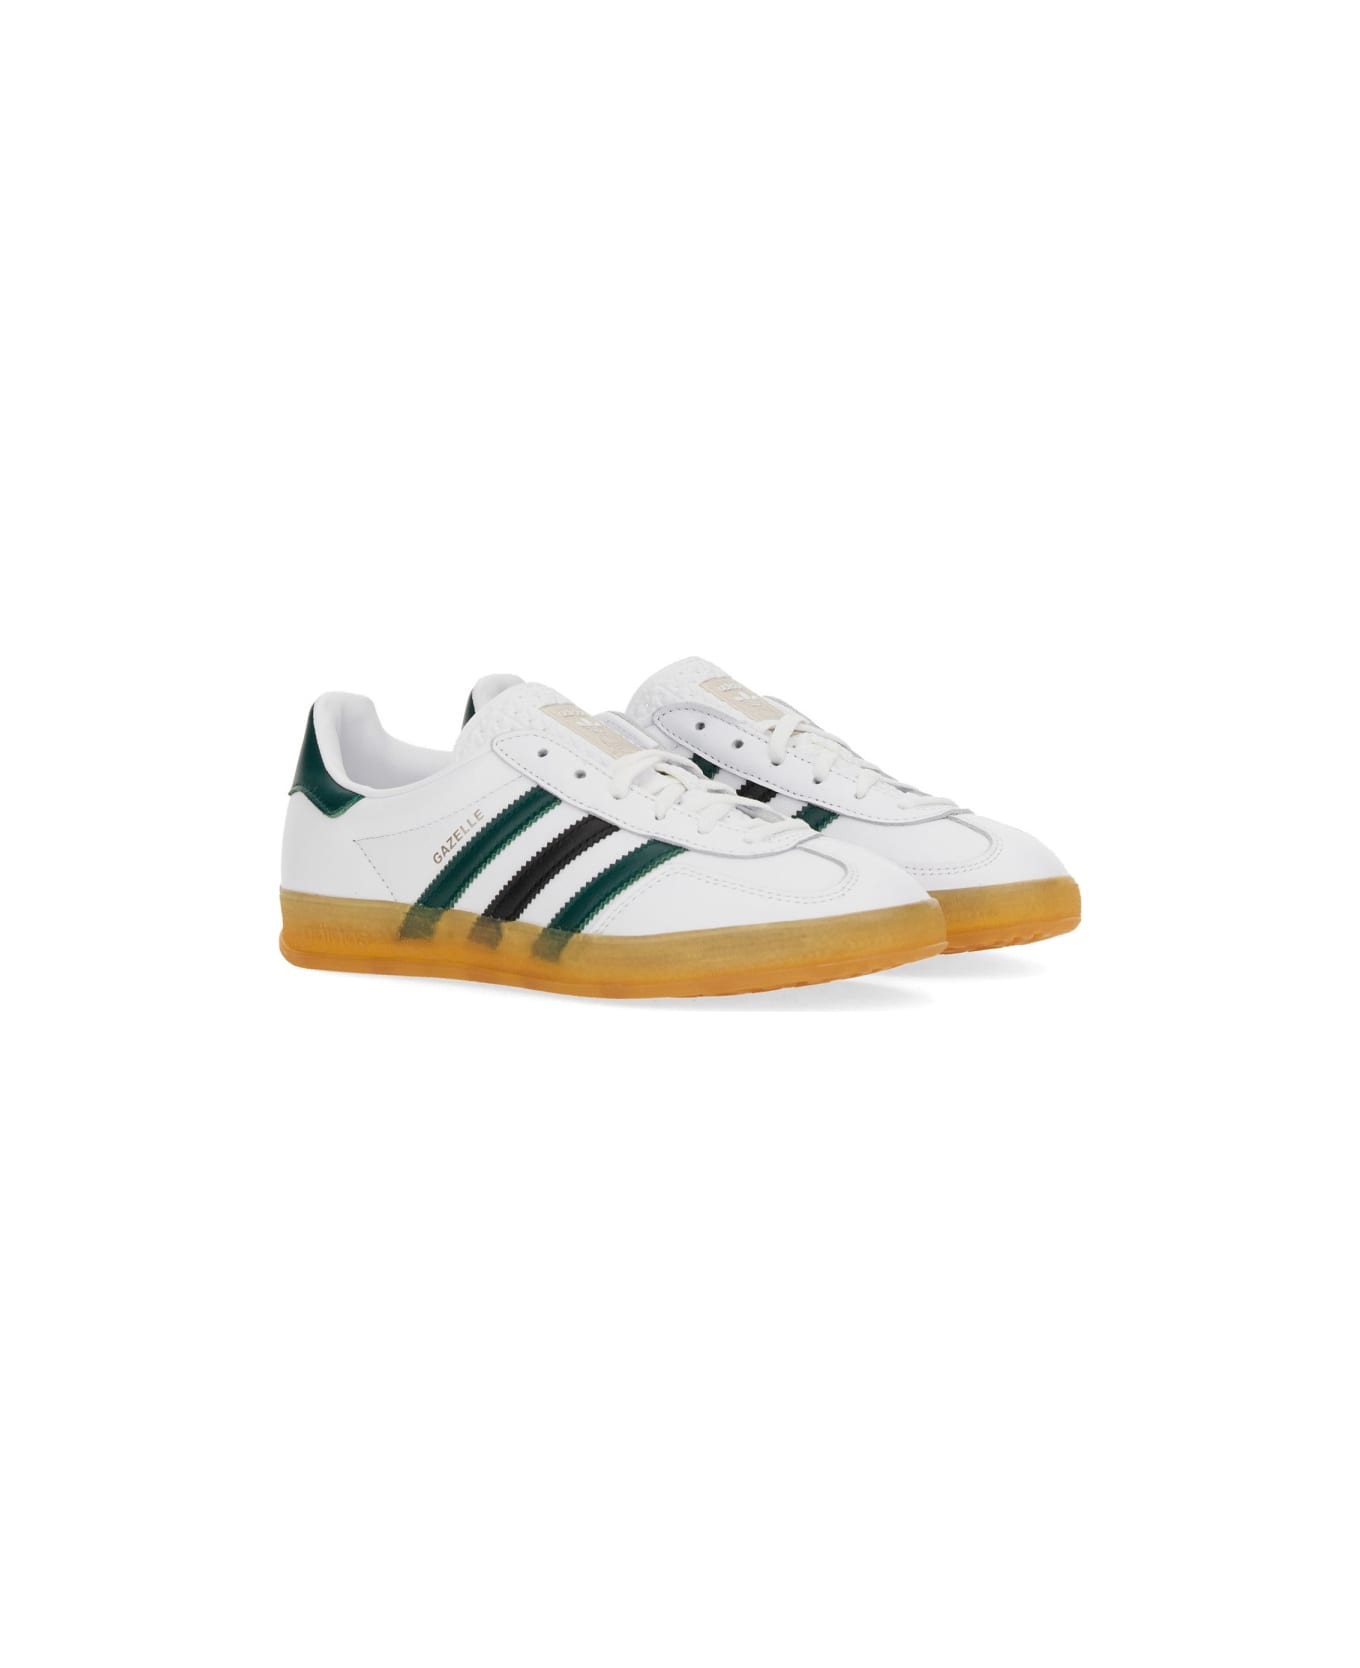 Adidas Originals Gazelle Indoor Shoe - Ftwwht/cgreen/cblack